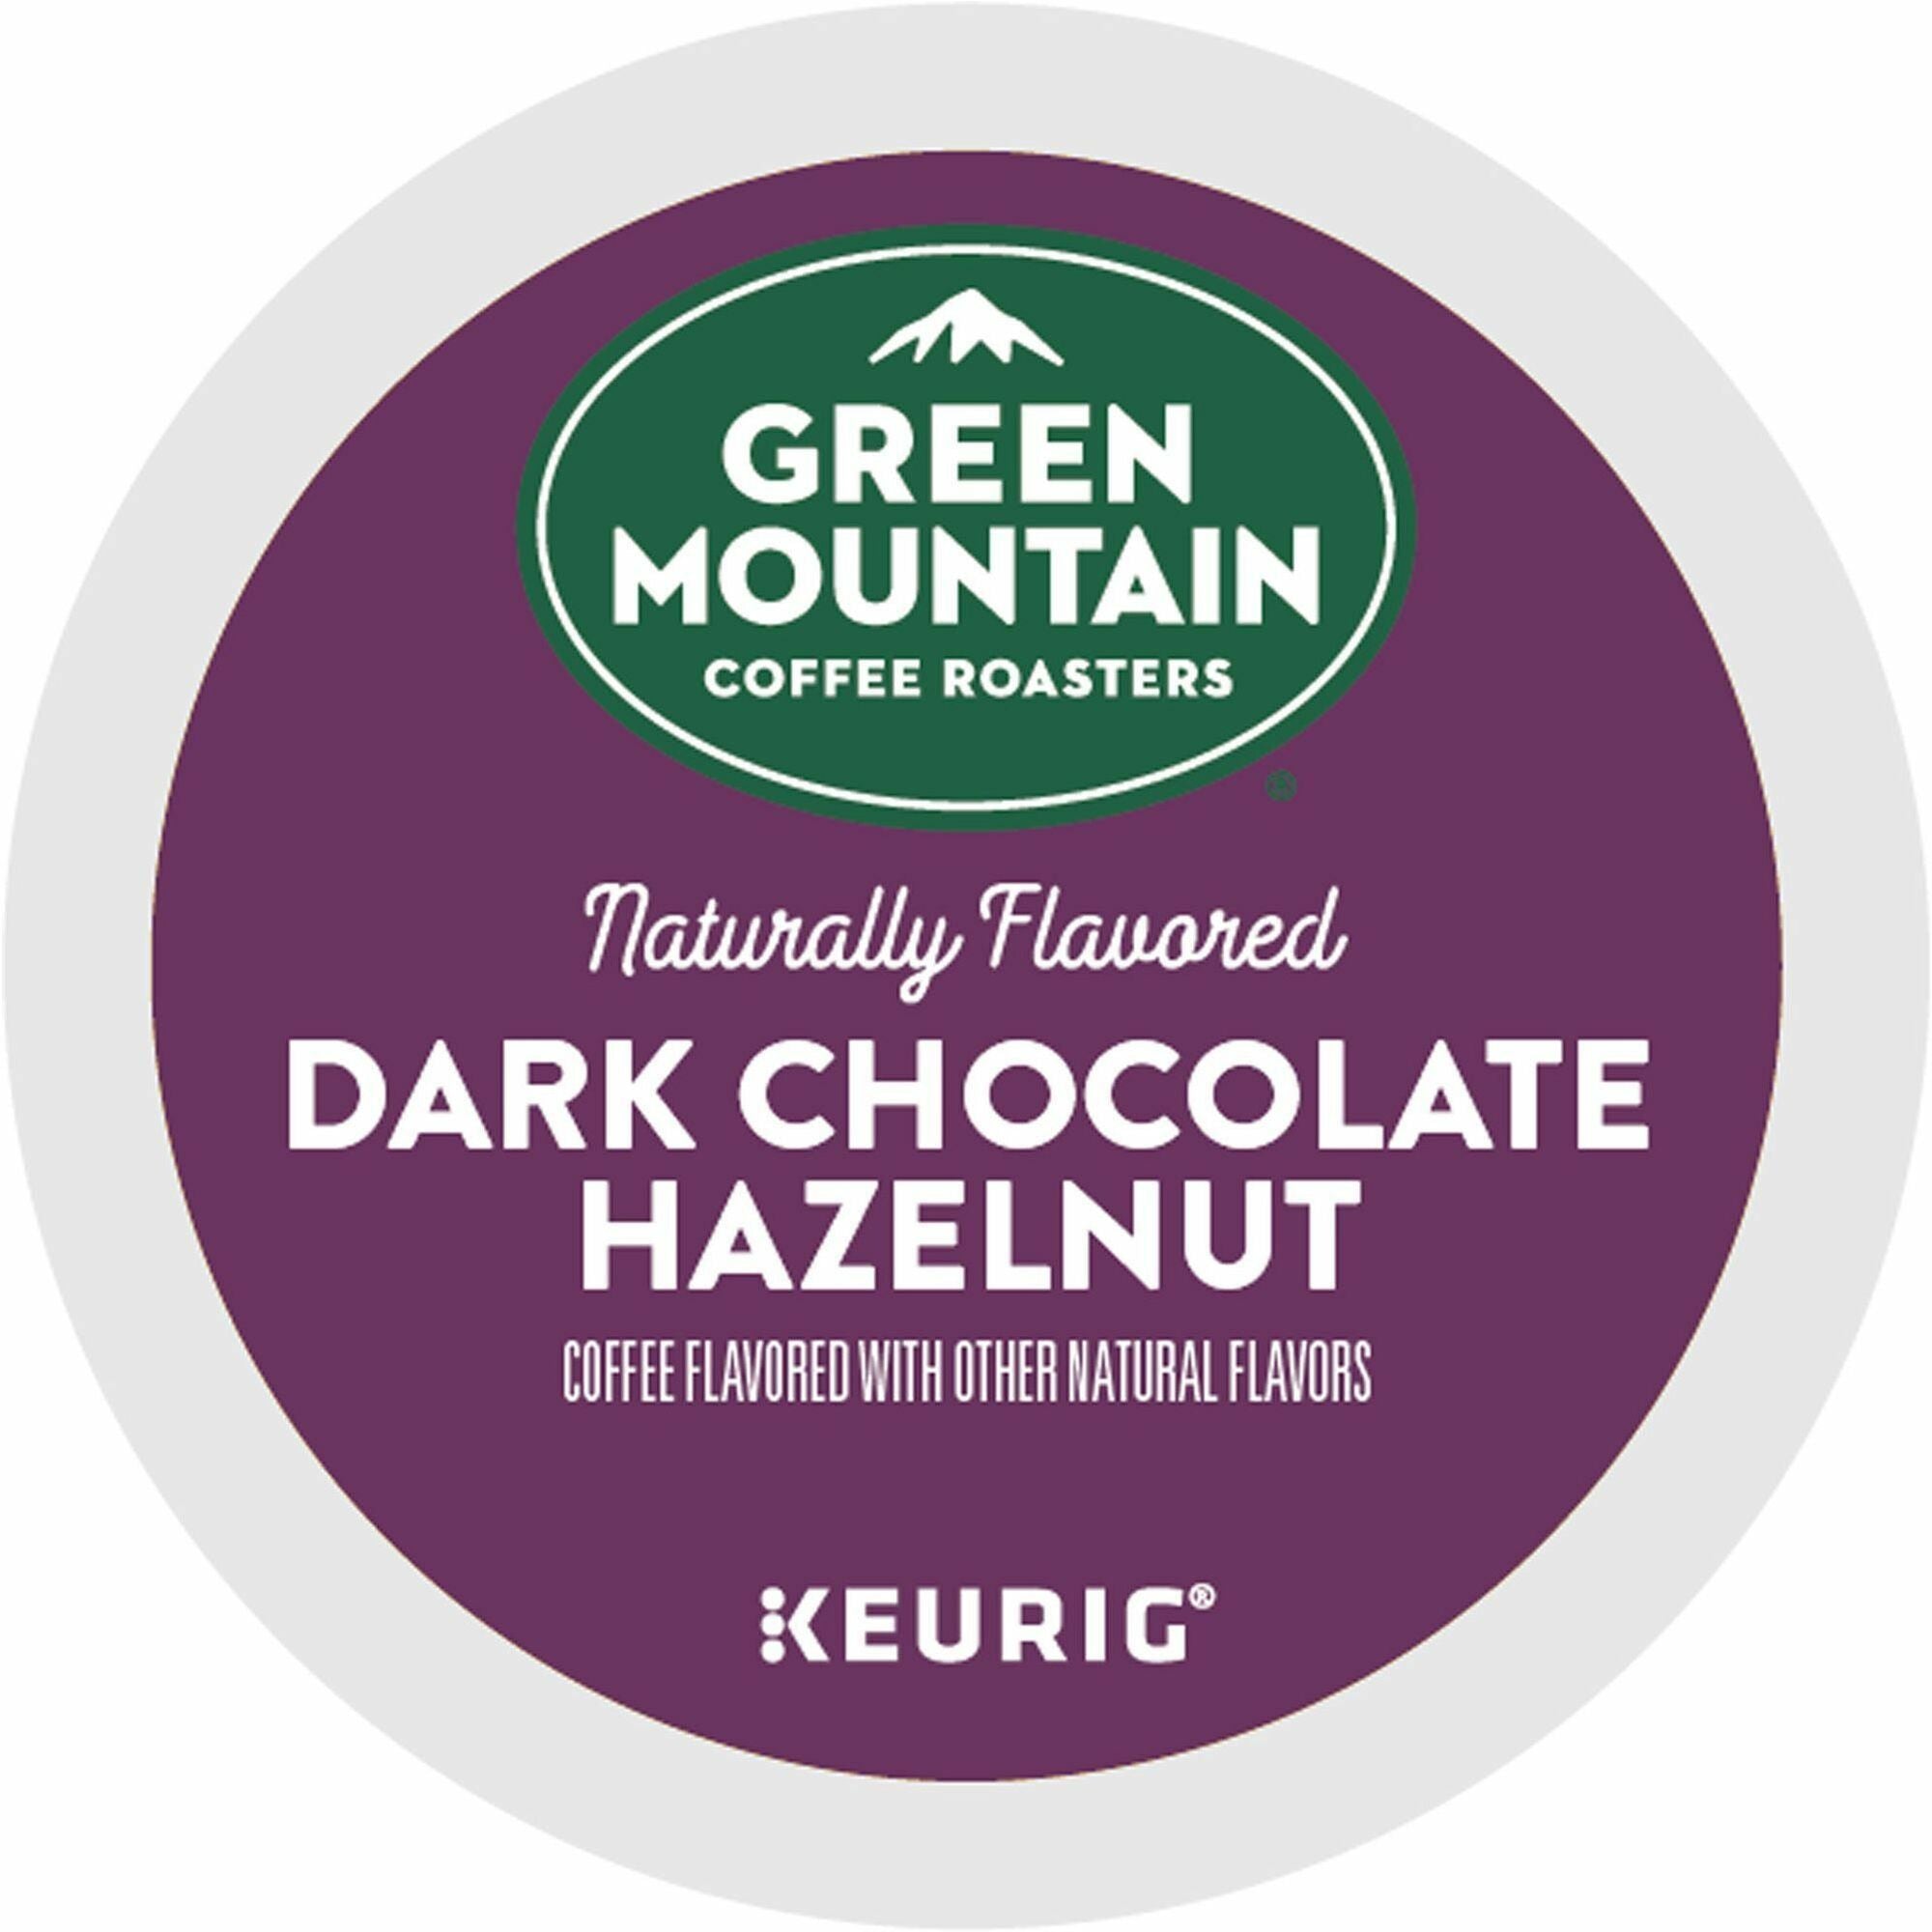 Green Mountain Coffee Roasters K-Cup Dark Chocolate Hazelnut Coffee - Compatible with K-Cup Brewer, Keurig Brewer - Medium - 24 / Box - 1